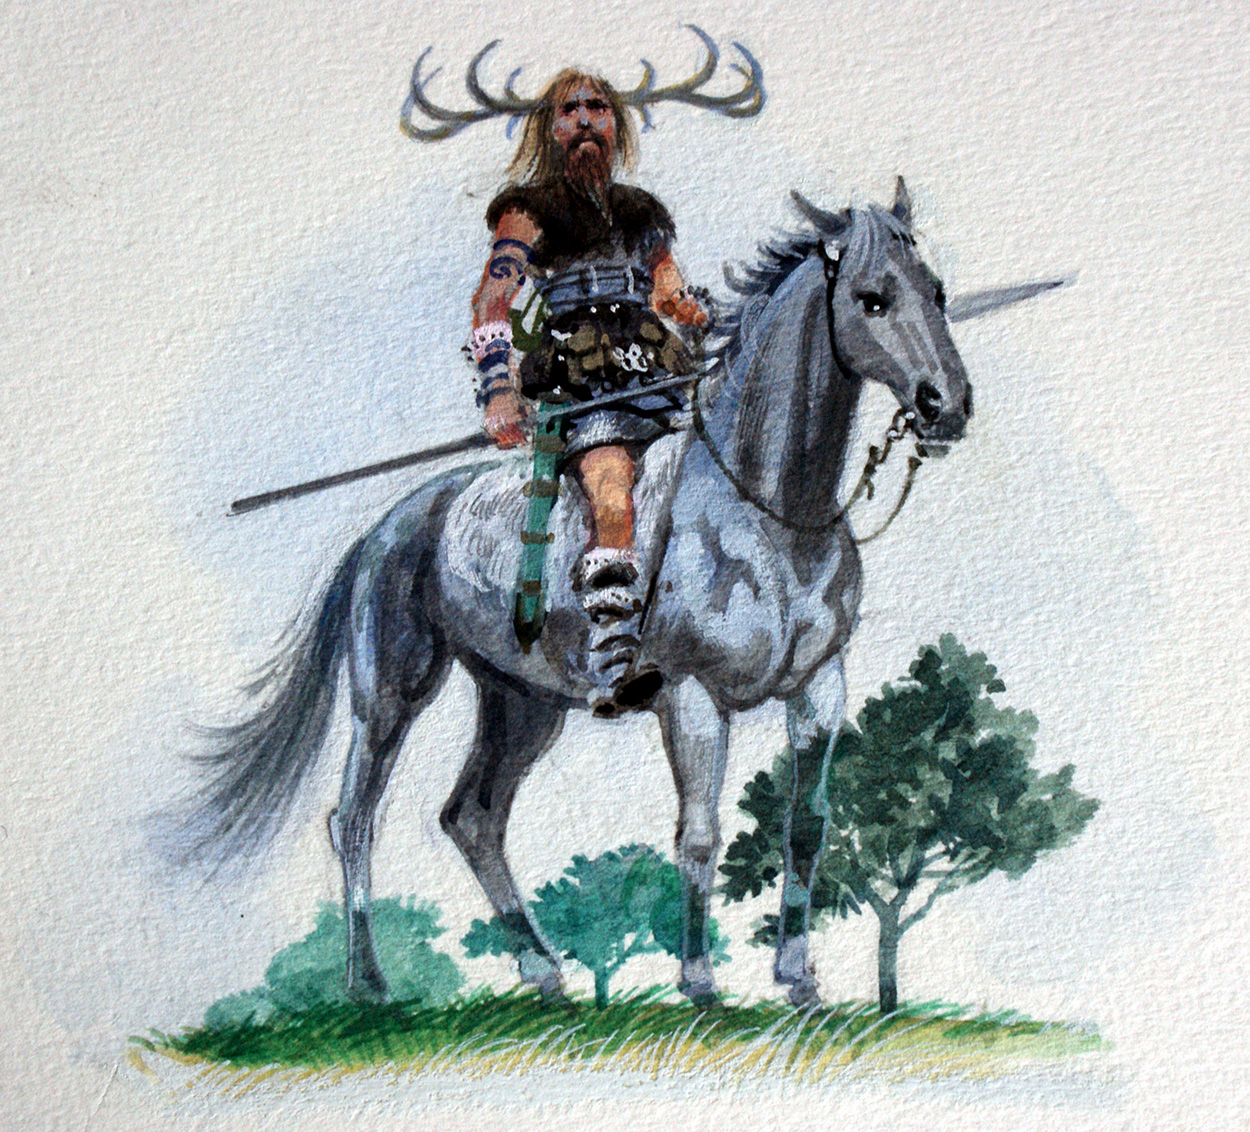 Herne the Hunter on Horseback (Original) art by British History (Howat) at The Illustration Art Gallery